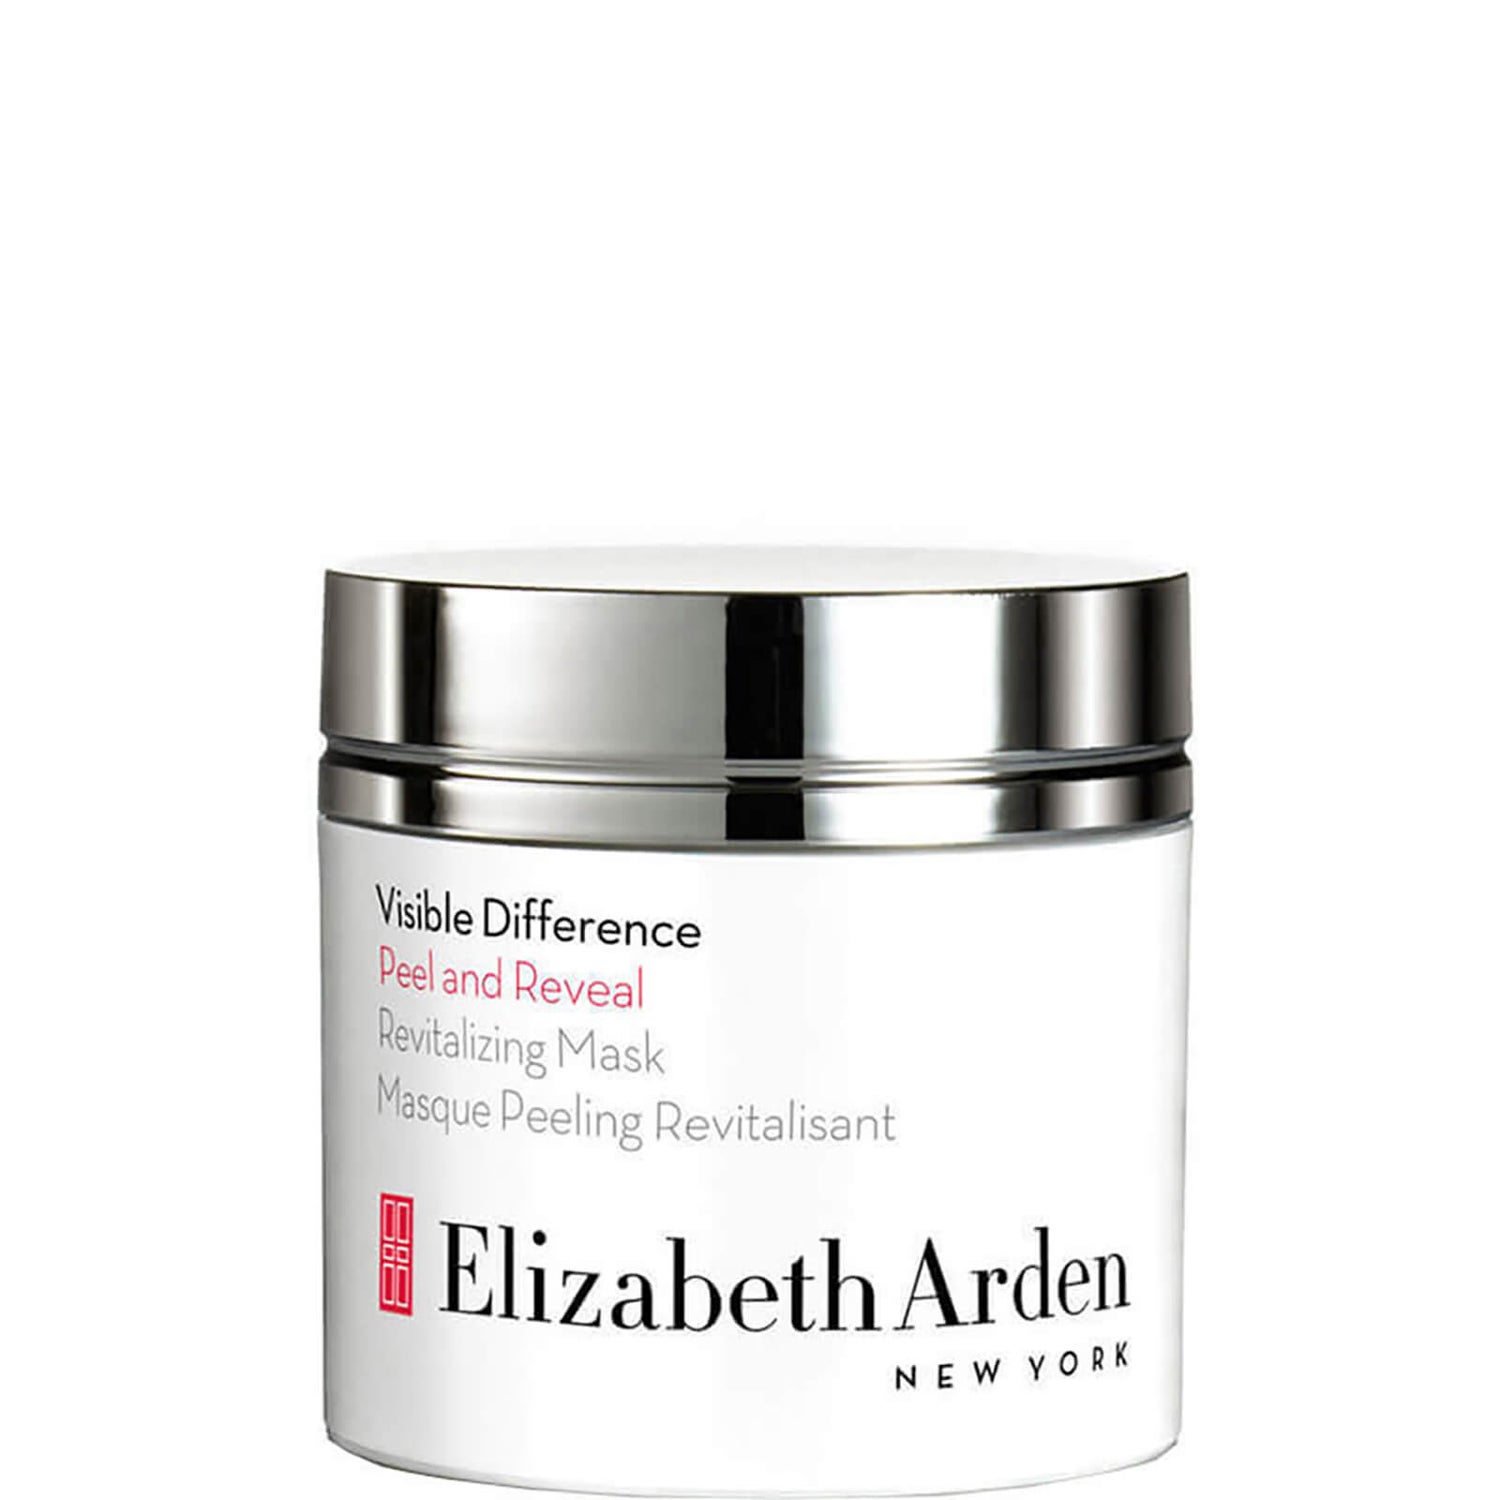 Elizabeth Arden Visible Difference Peel and Reveal Revitalizing Mask (1.7 fl. oz.)